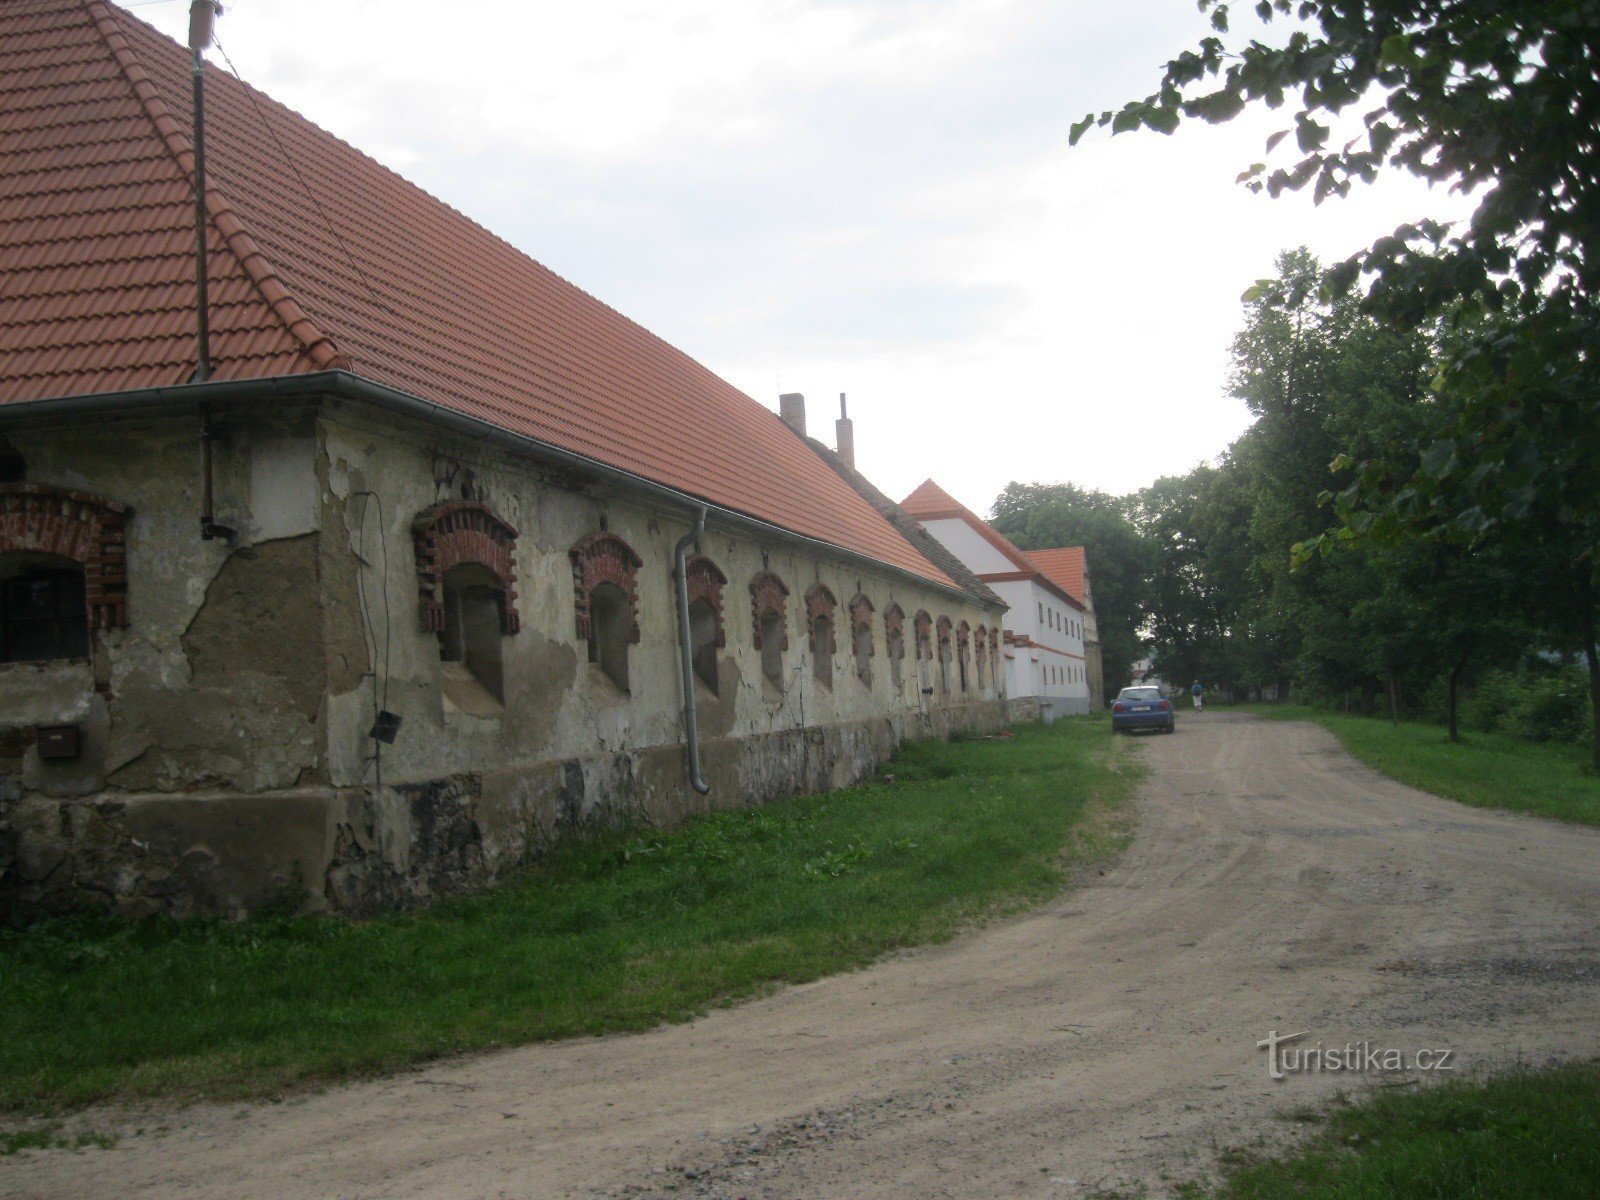 Der alte Teil von Červený Újezdec